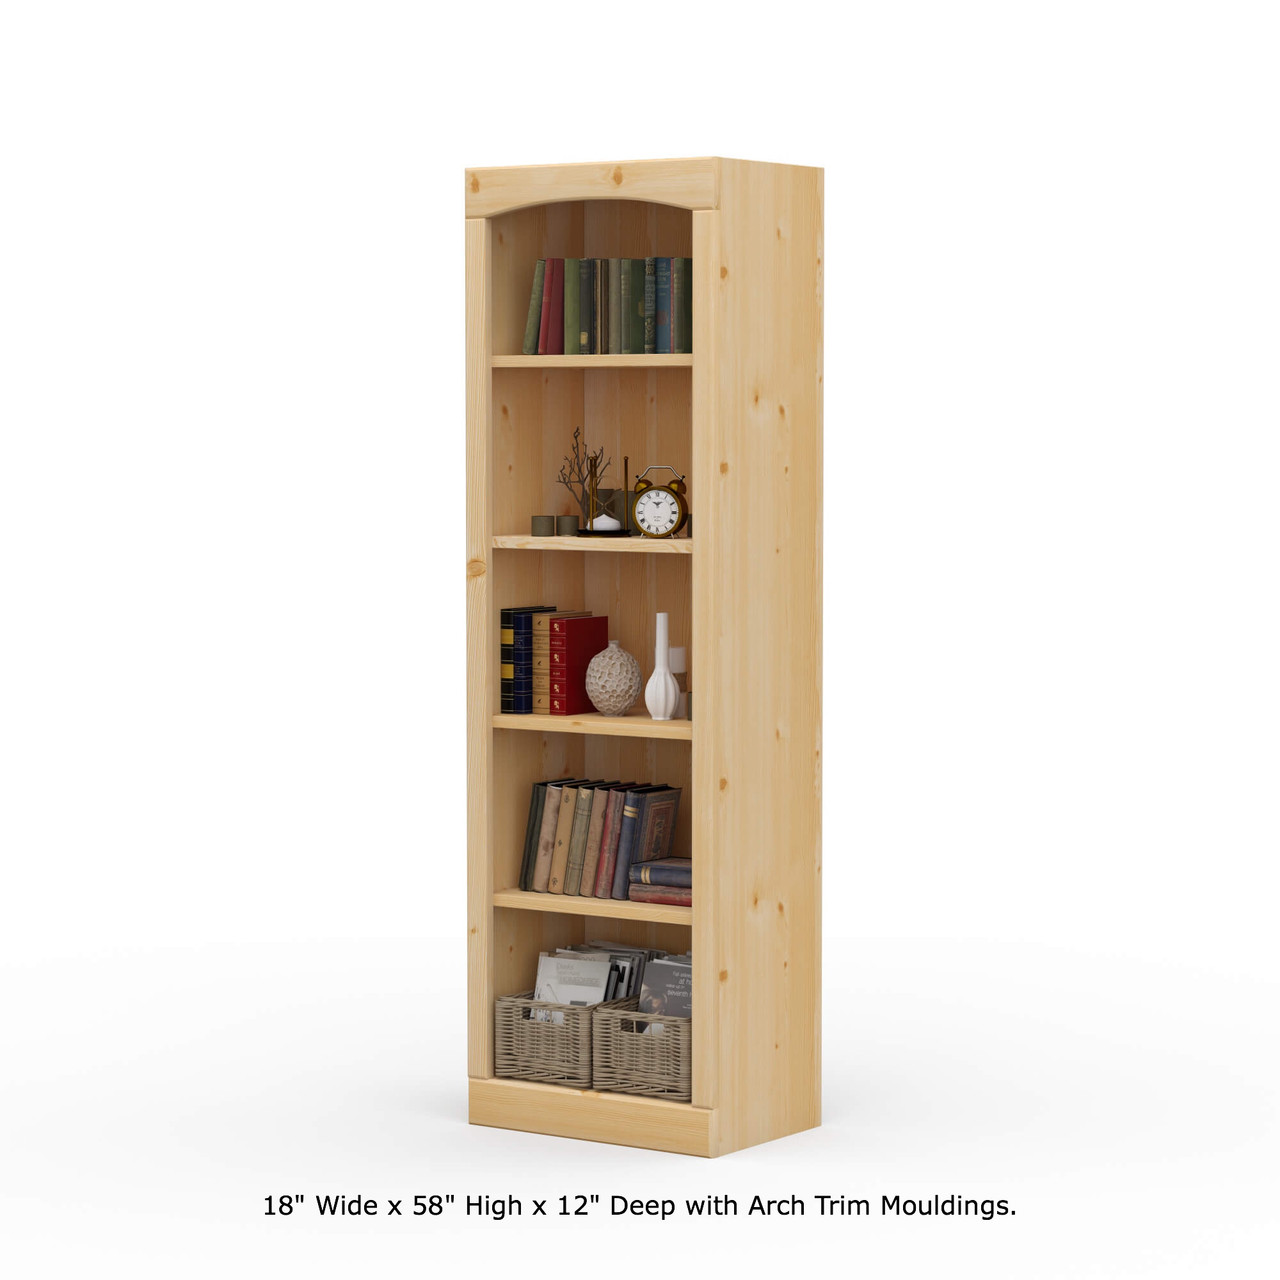 Real Wood Bookcase 58 High x 12 Deep